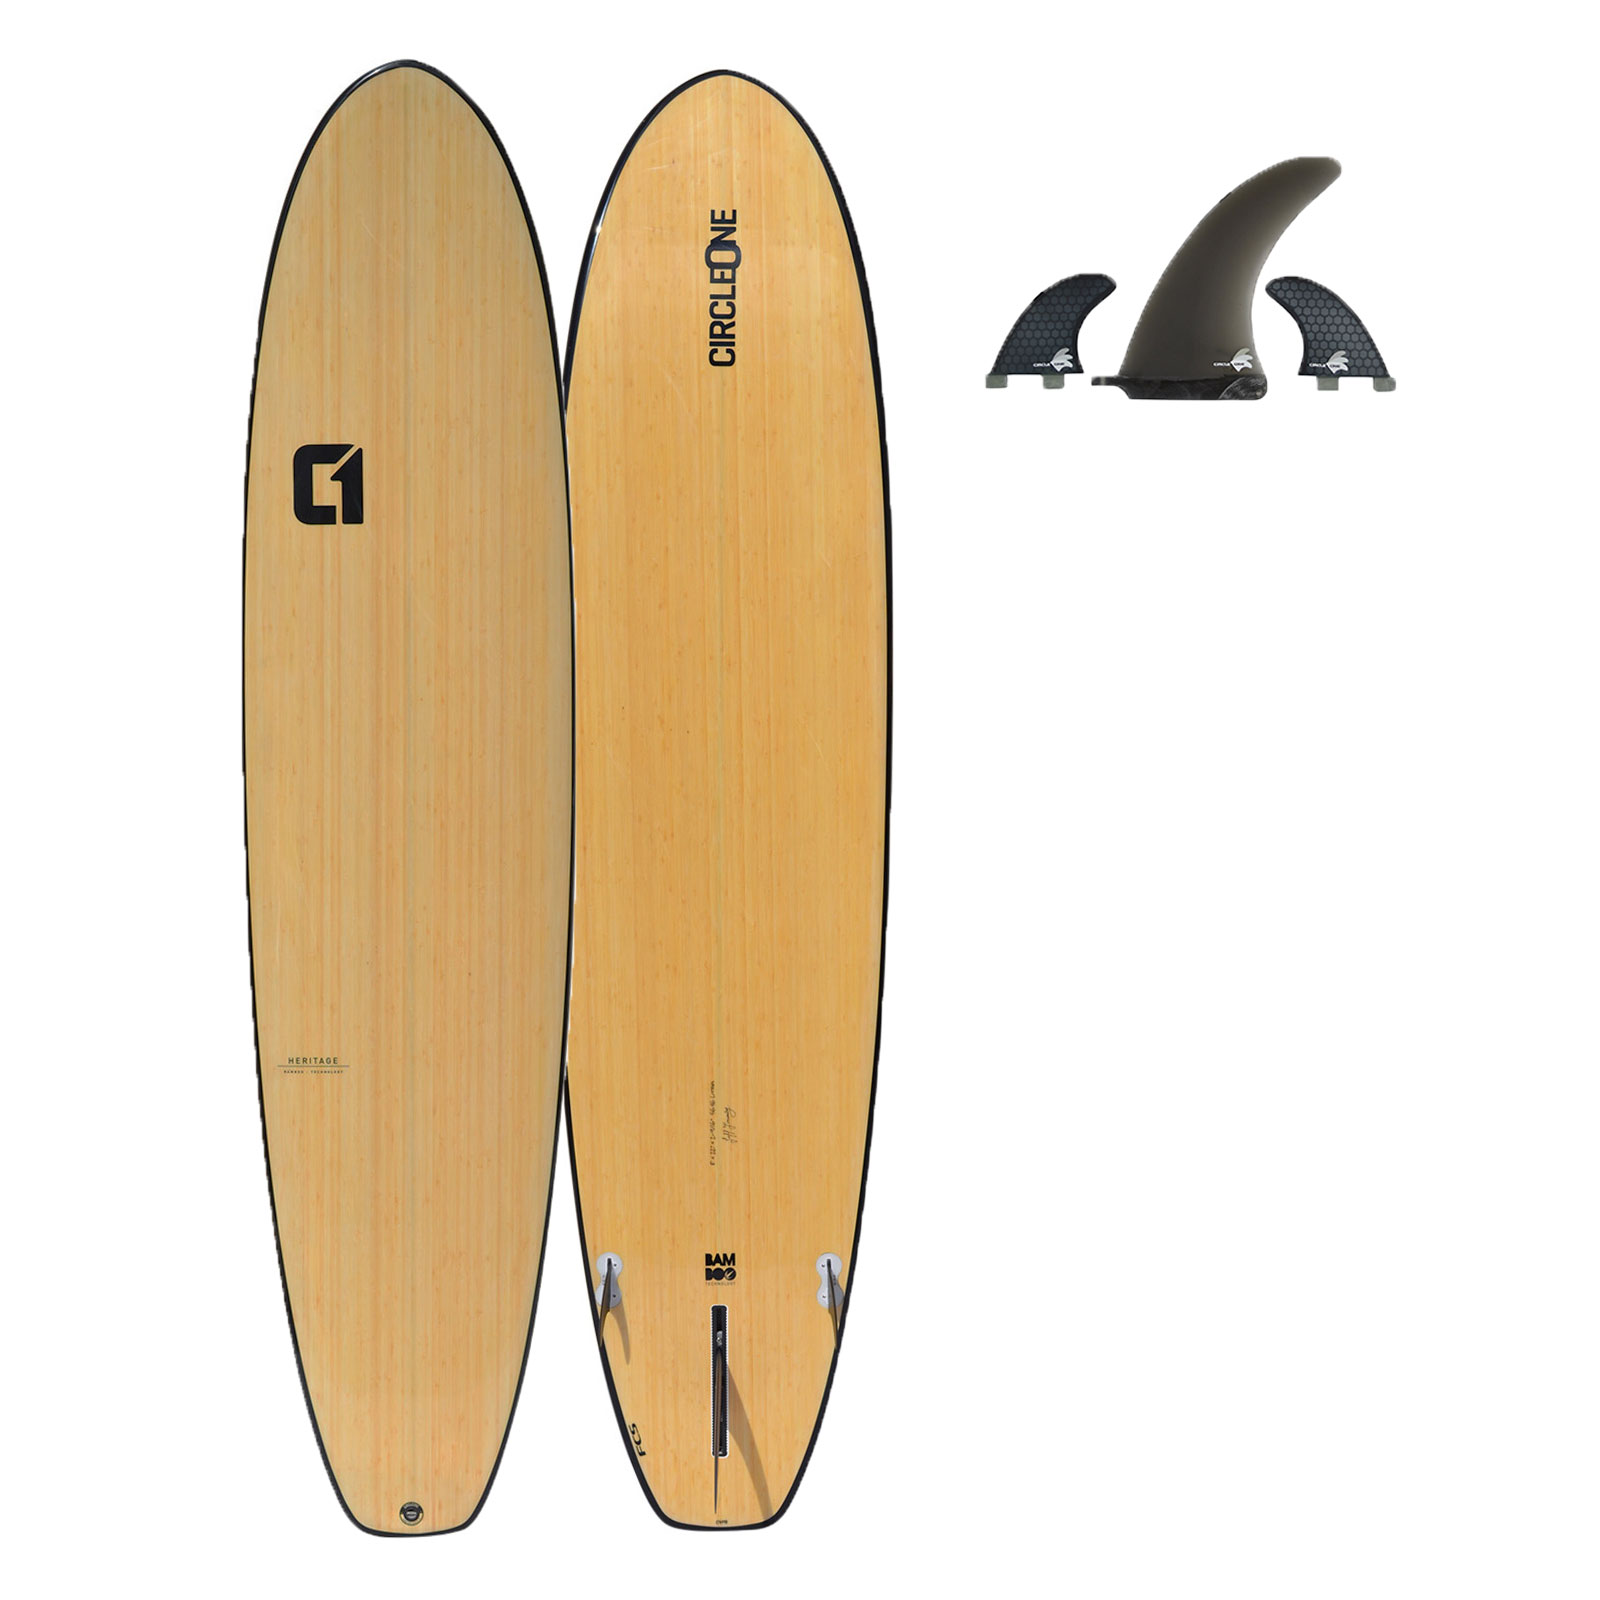 Mini Mal Surfboard - 8ft Bamboo Squash Tail Mini Mal Surfboard from Circle One